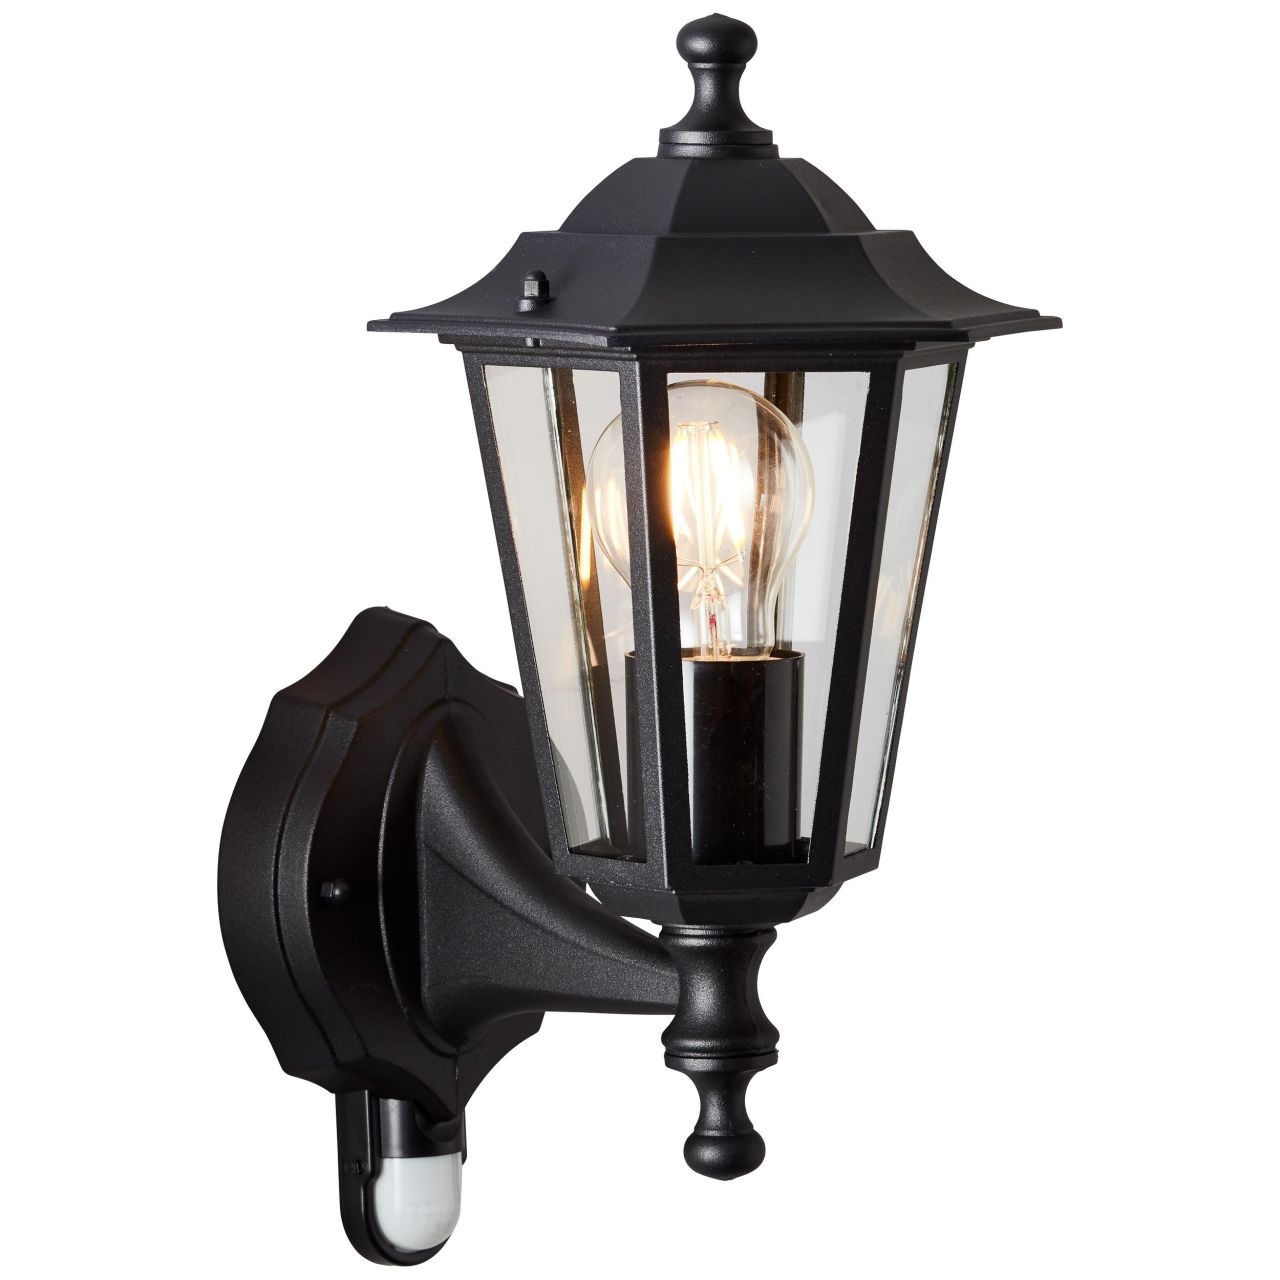 BRILLIANT Lampe, Carleen Außenwandleuchte Bewegungsmelder schwarz, 1x A60, E27, 60W, IP-Schutzart: 23 - regengeschützt